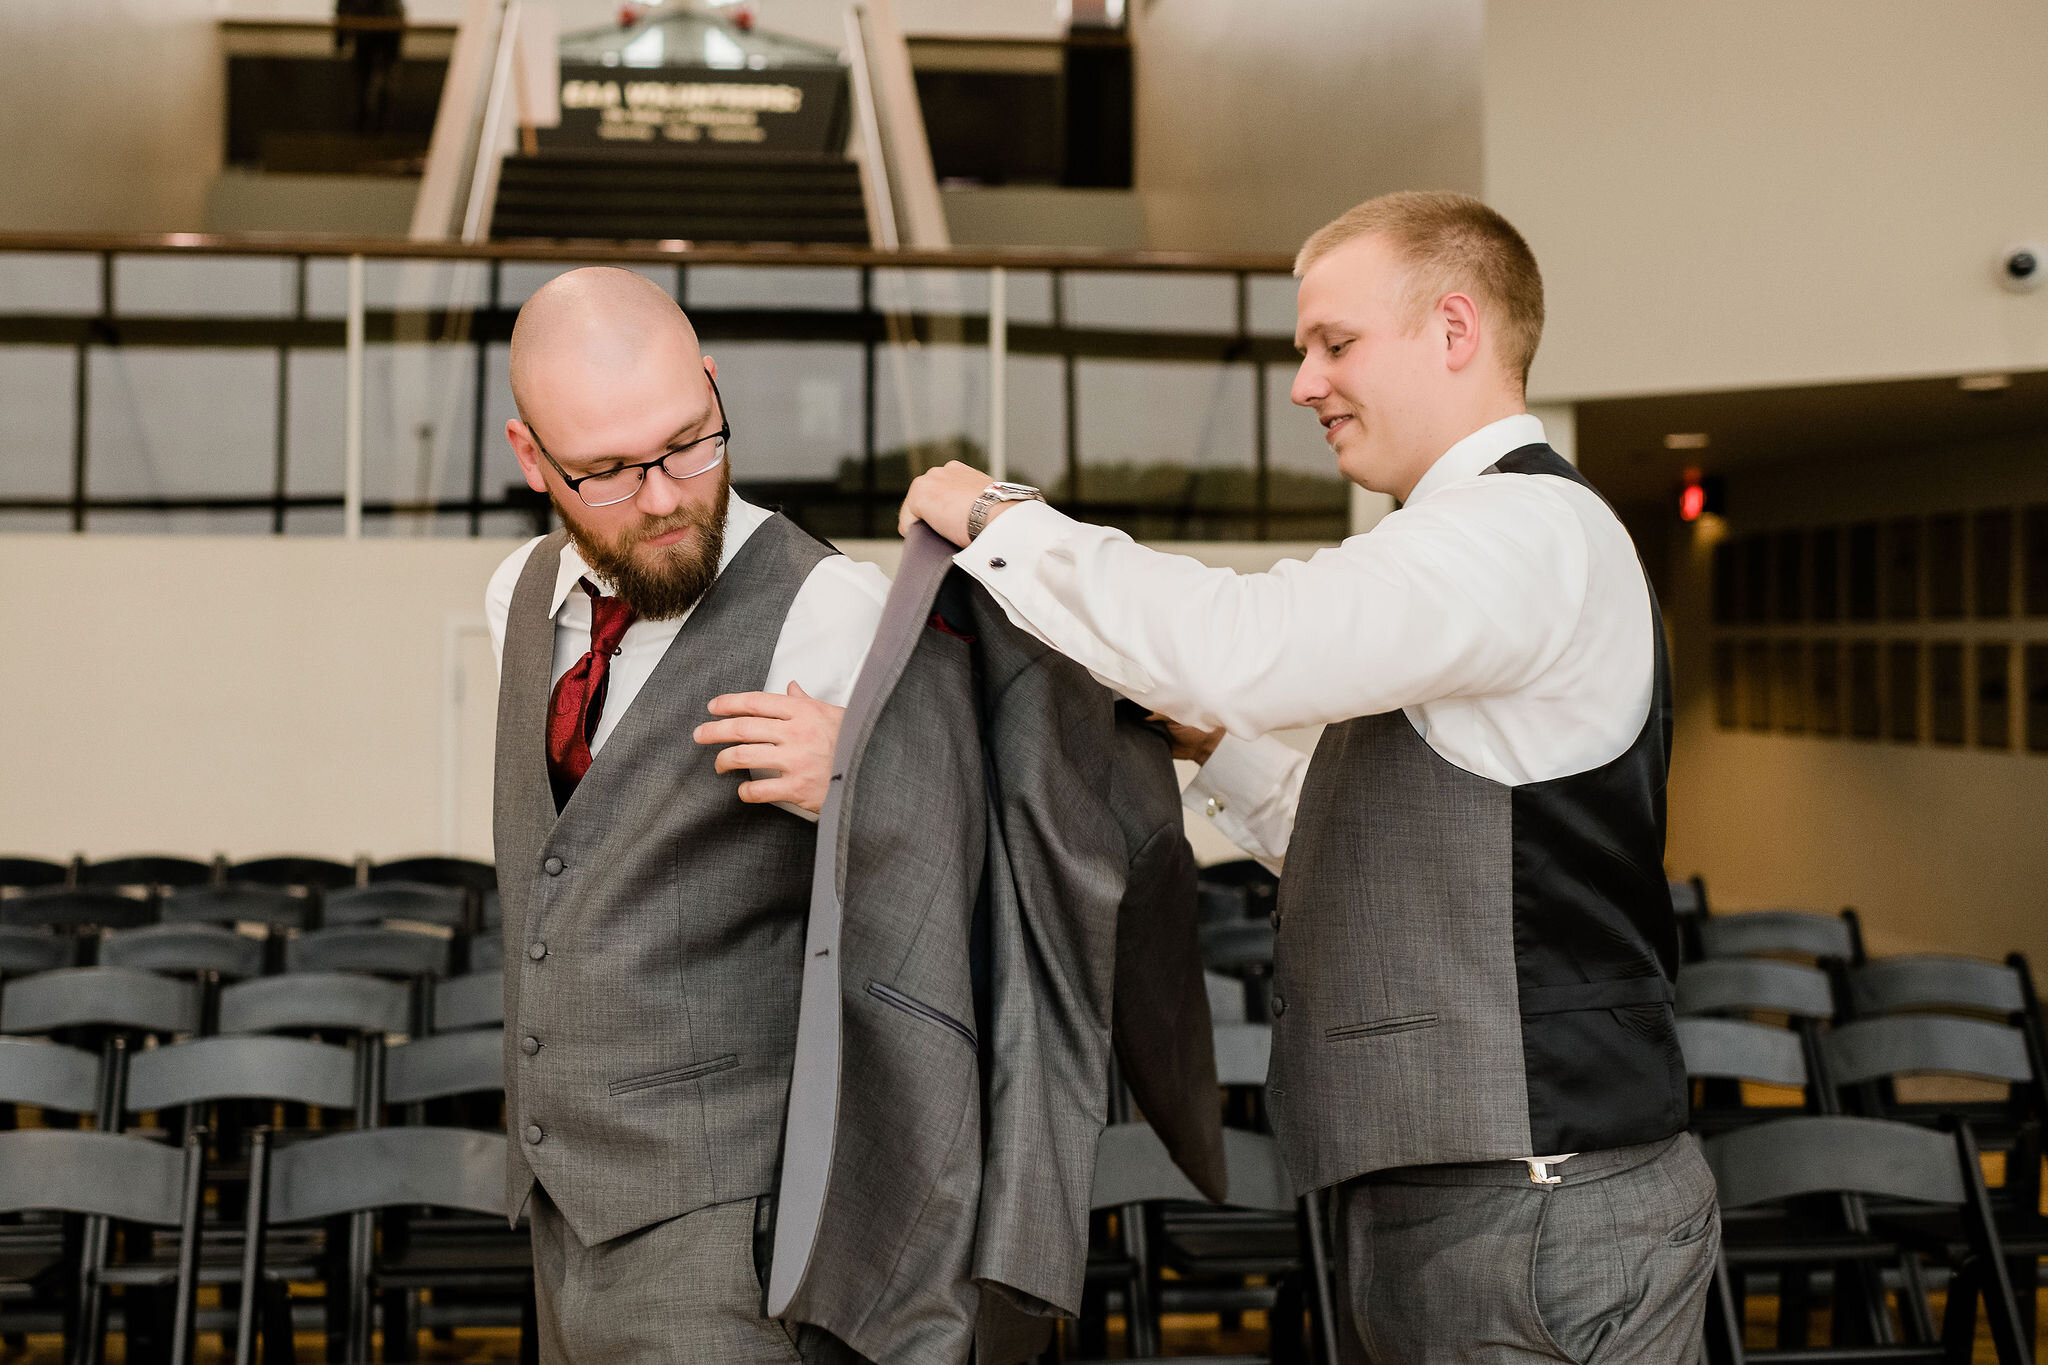 Groomsman helping groom into his suit jacket